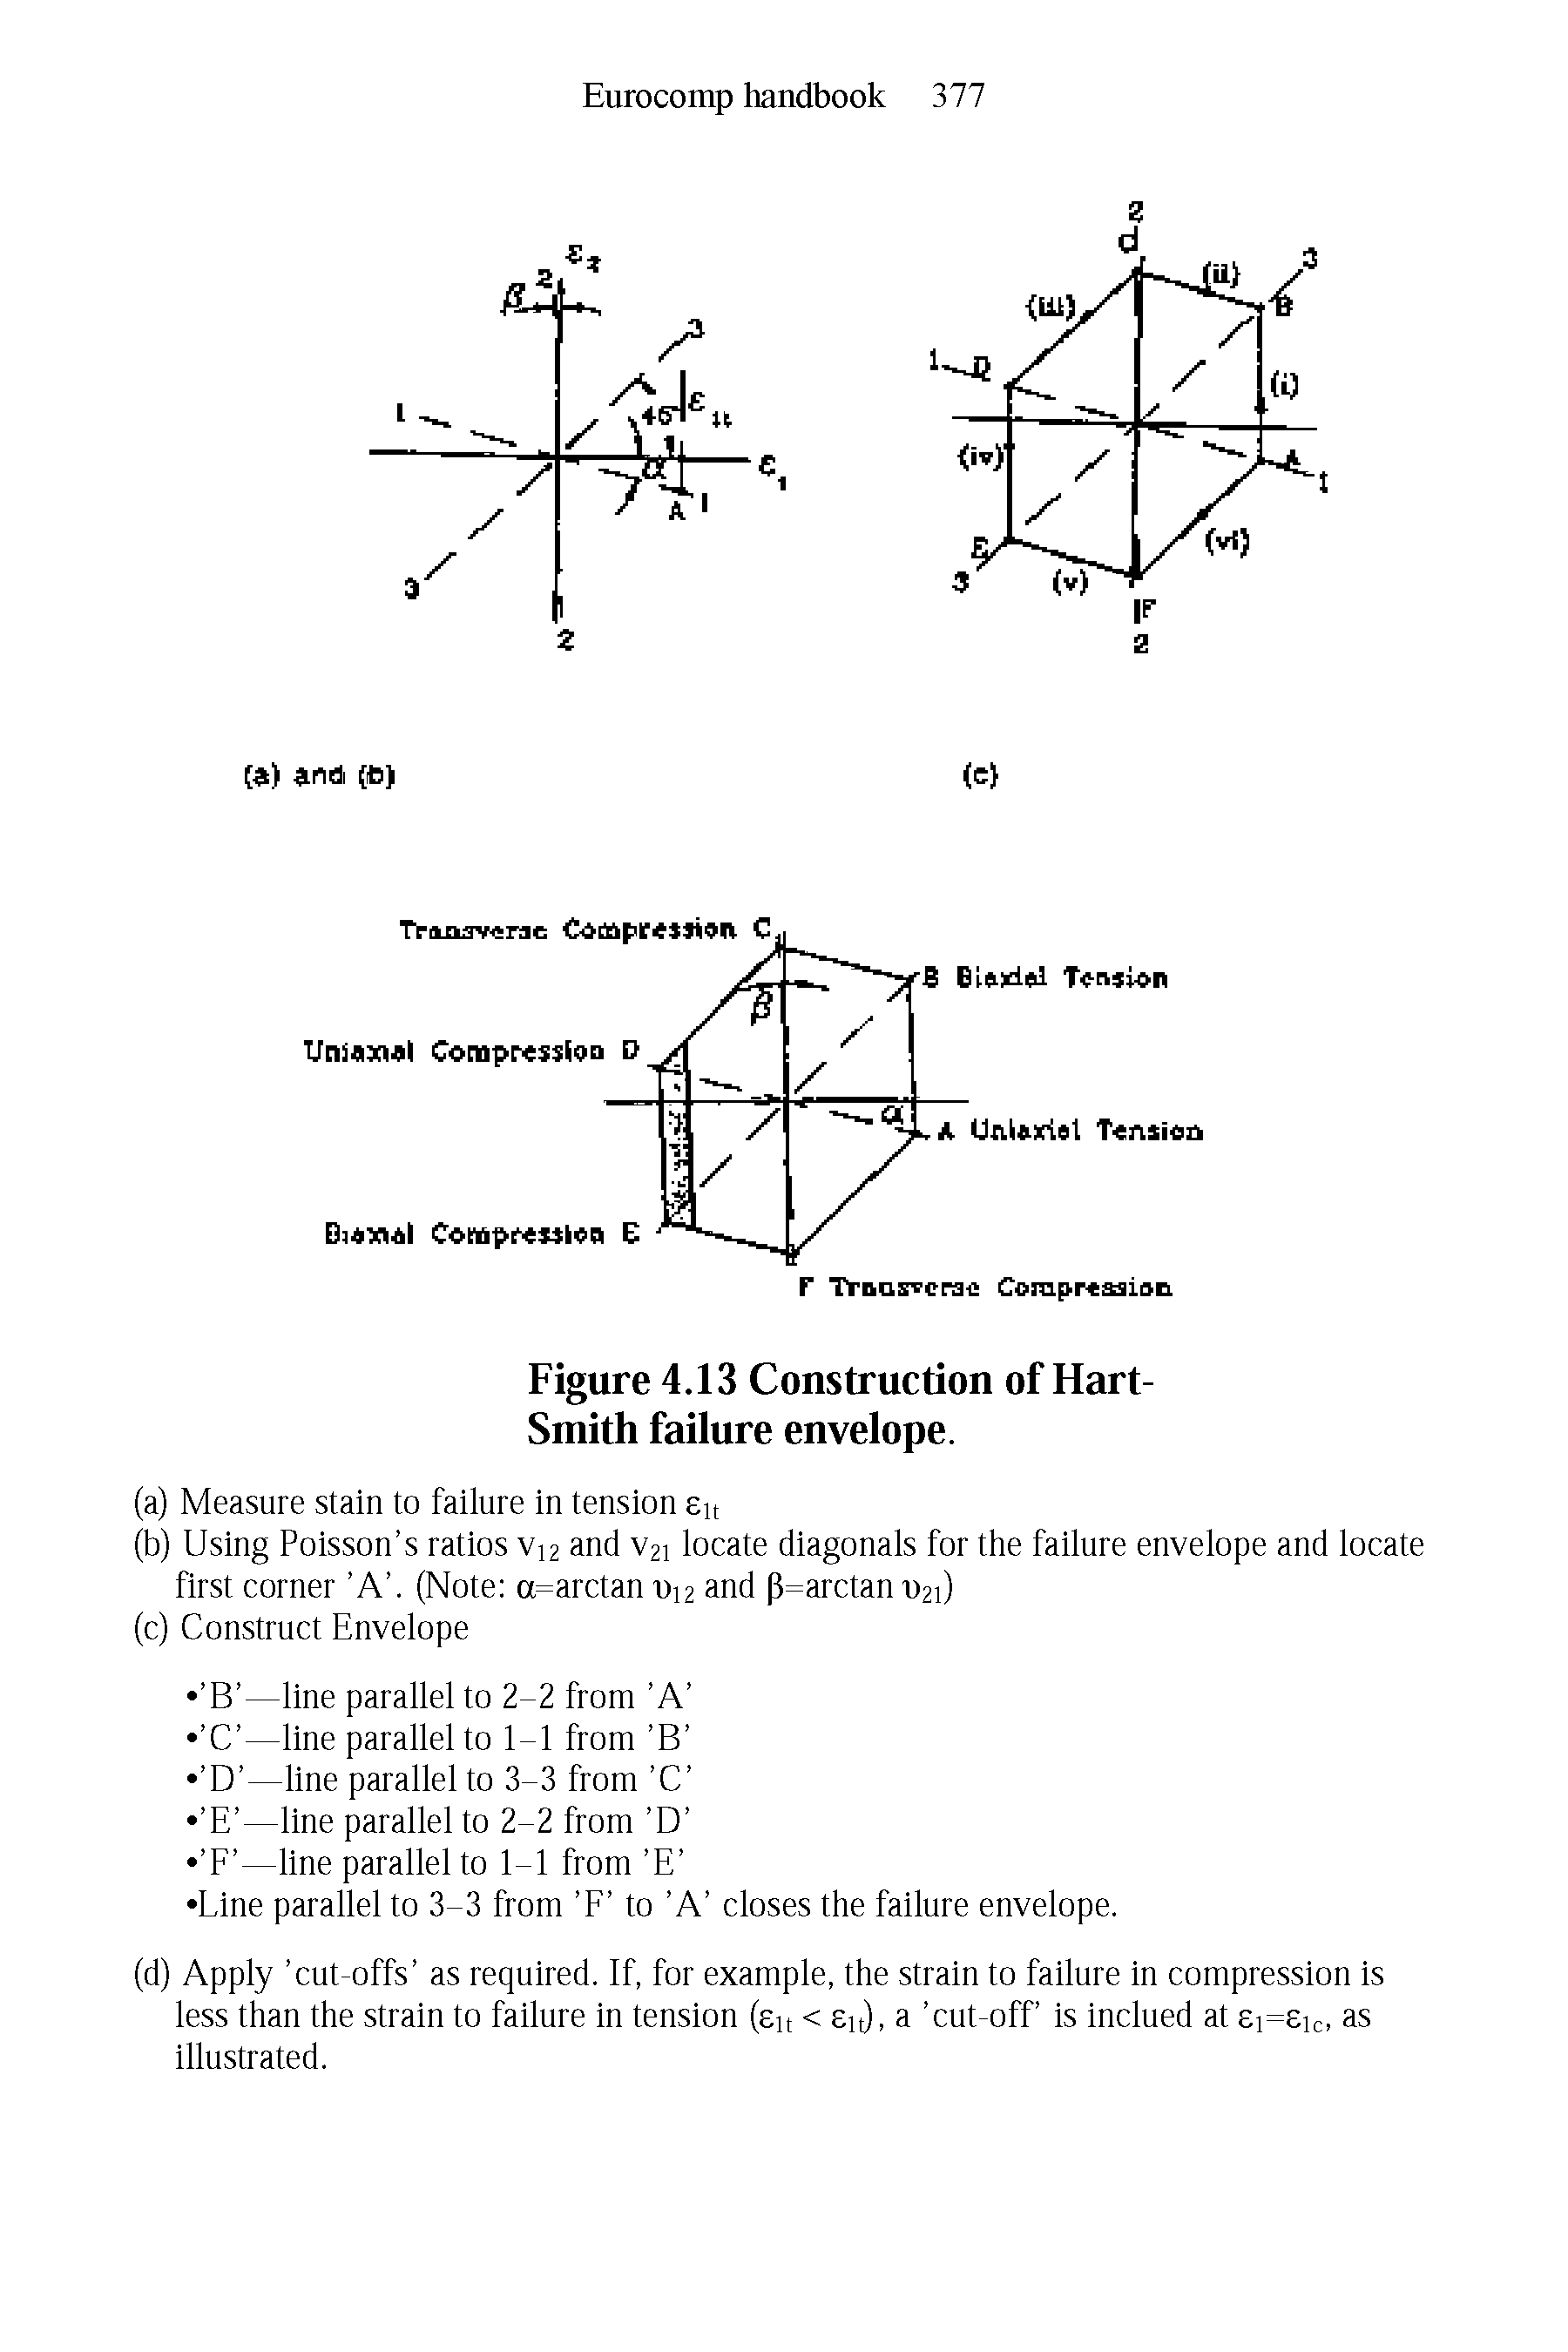 Figure 4.13 Construction of Hart-Smith failure envelope.